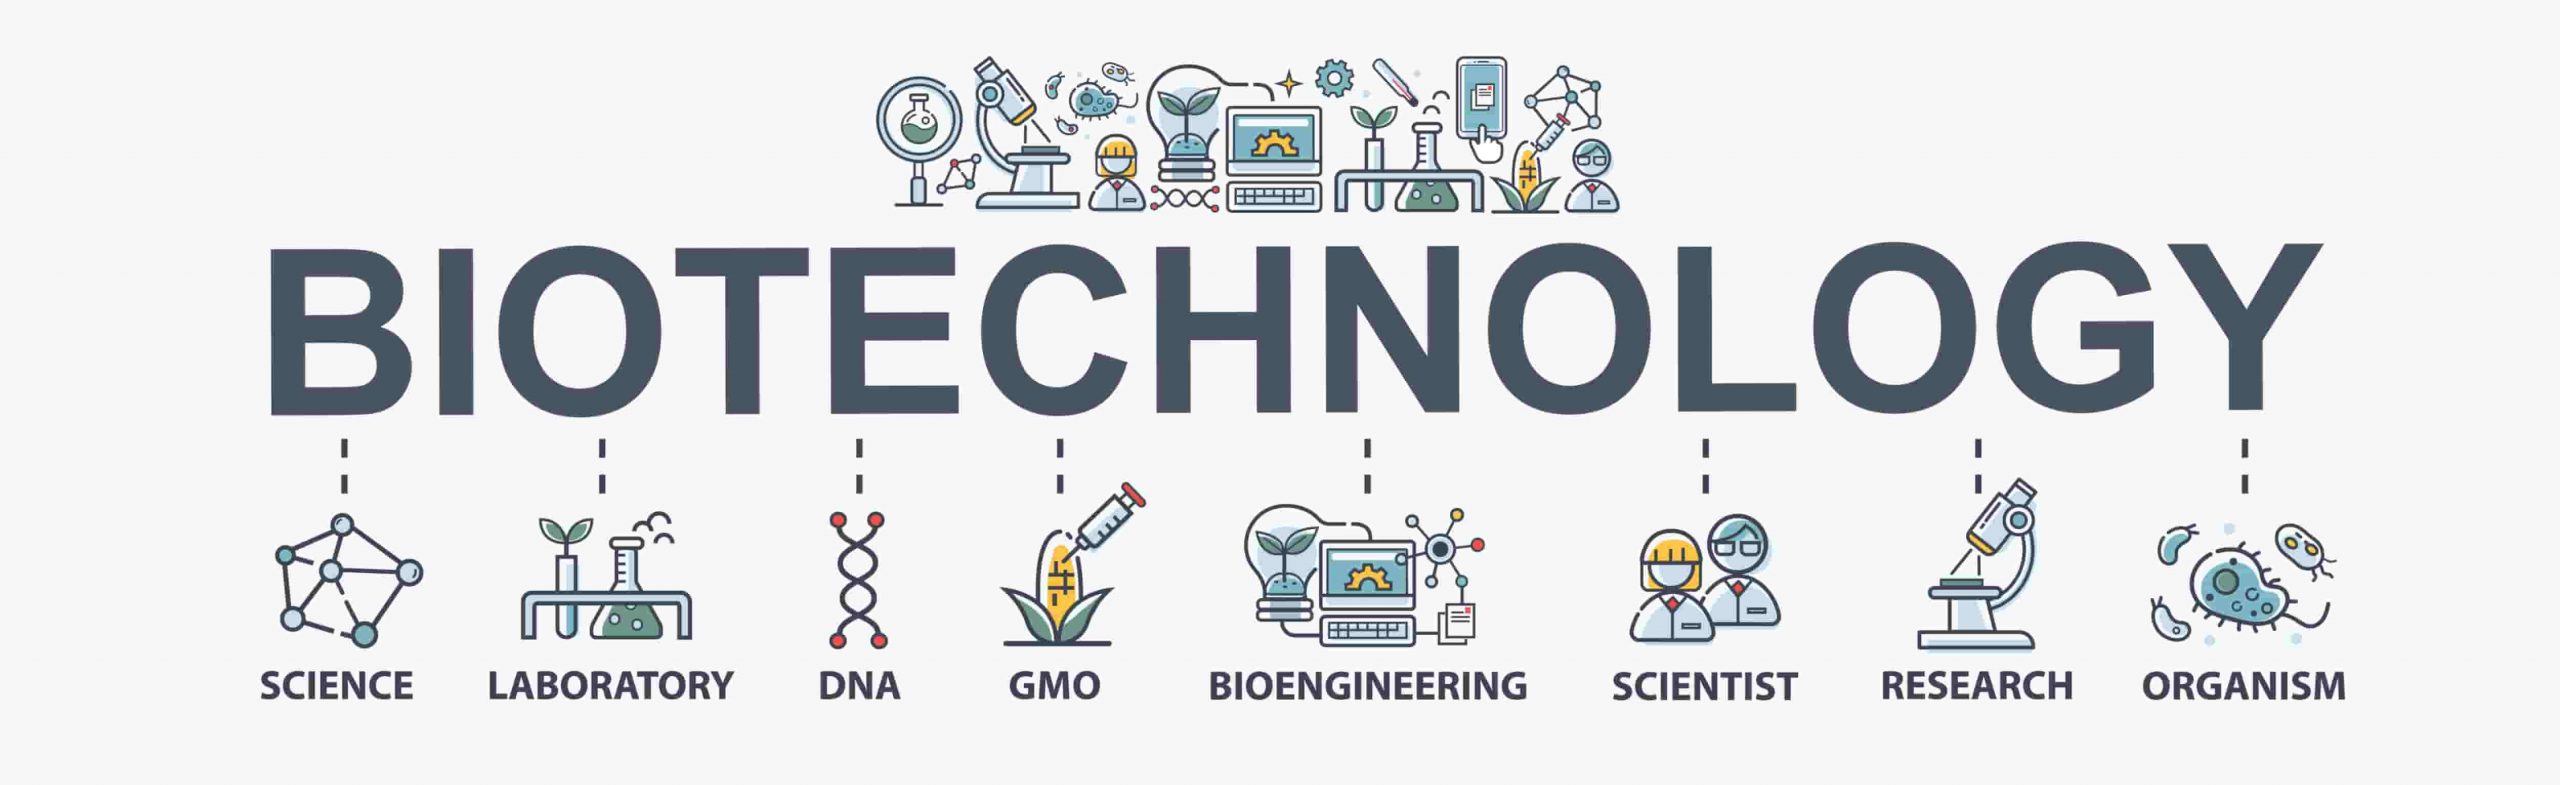 Biotechnology cartoon infographic